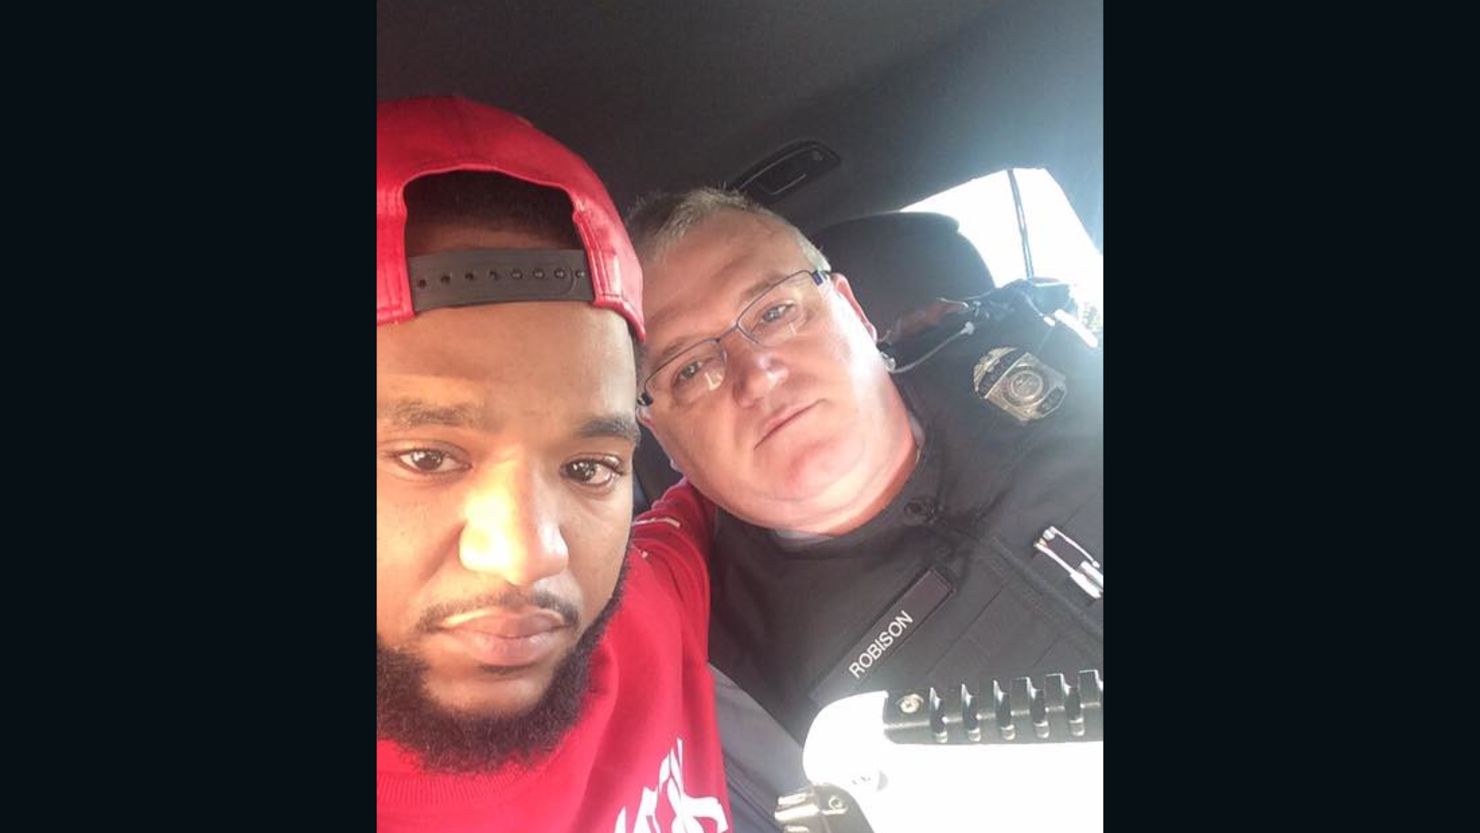 Mark Ross said he disliked cops, until he met Ohio State Highway Patrol Sgt. David Robison.